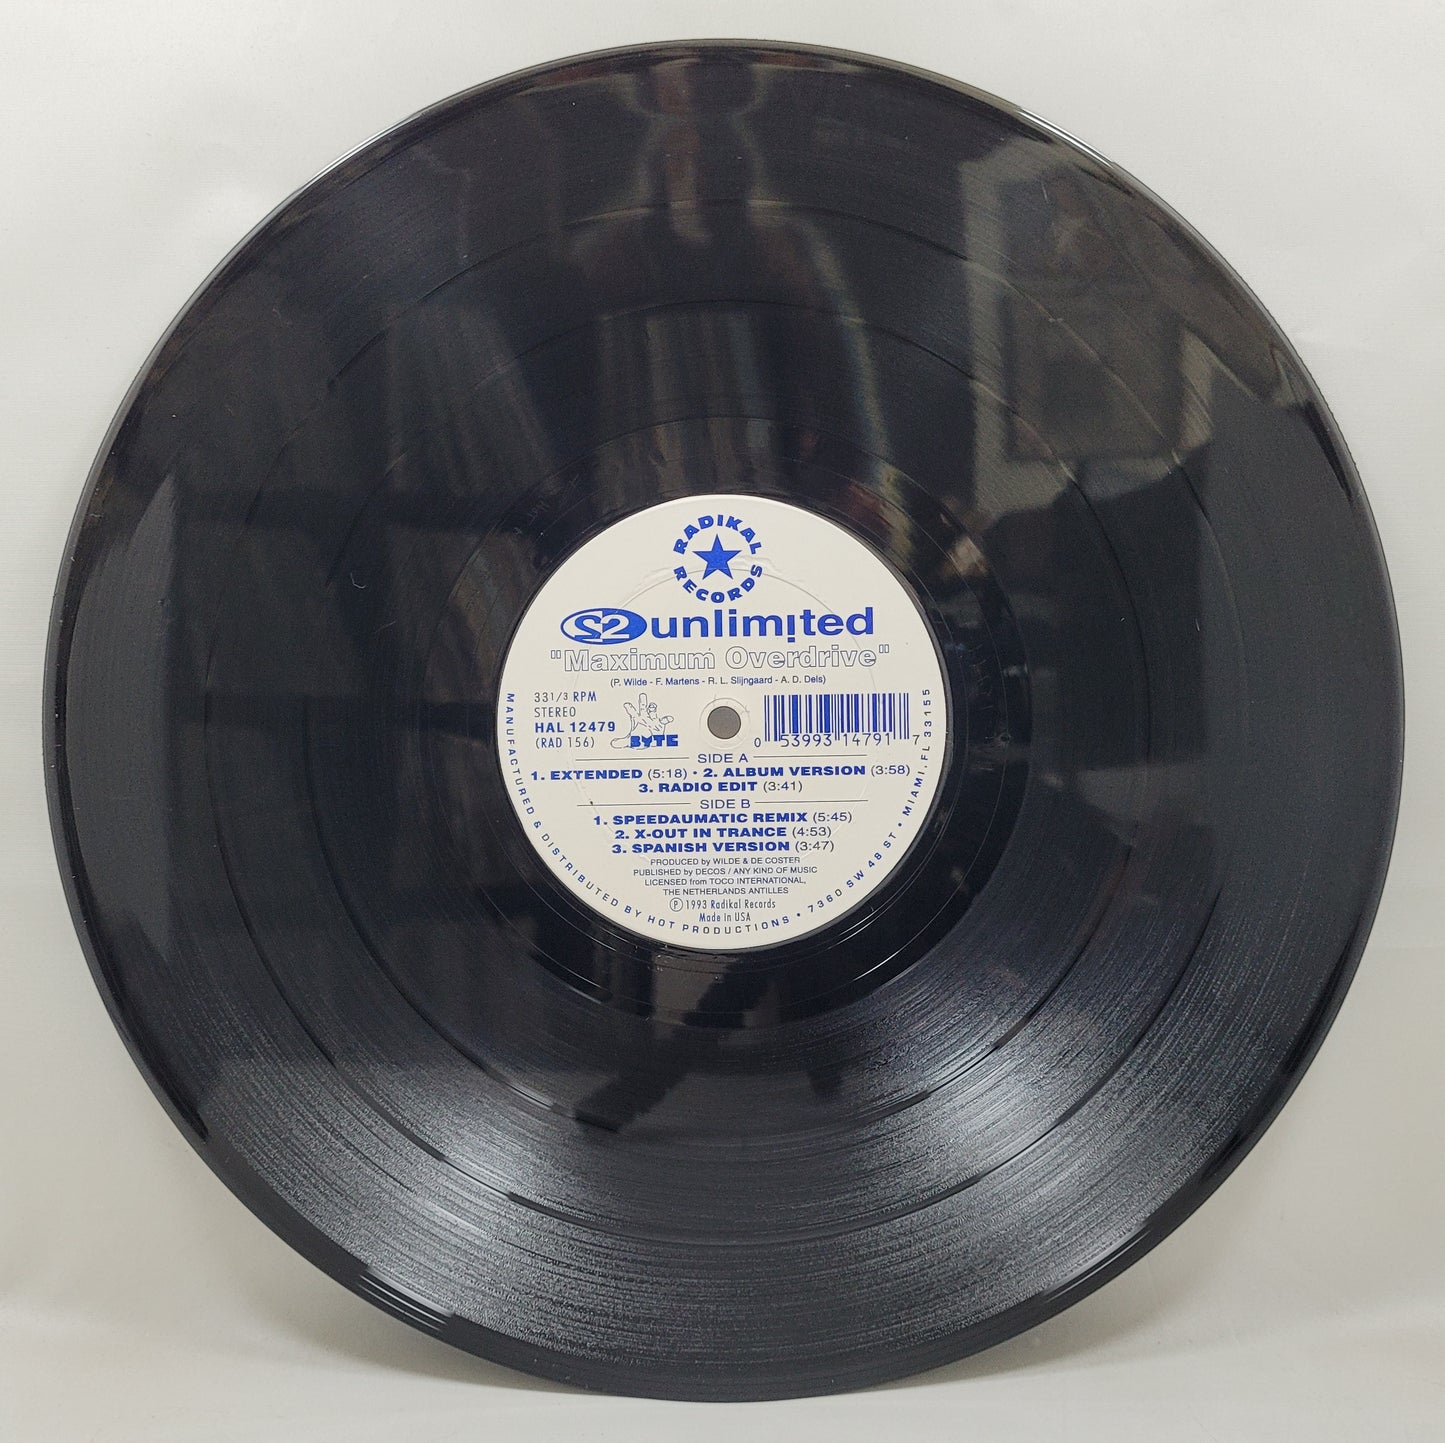 2 Unlimited - Maximum Overdrive [1993 Used Vinyl Record 12" Single]